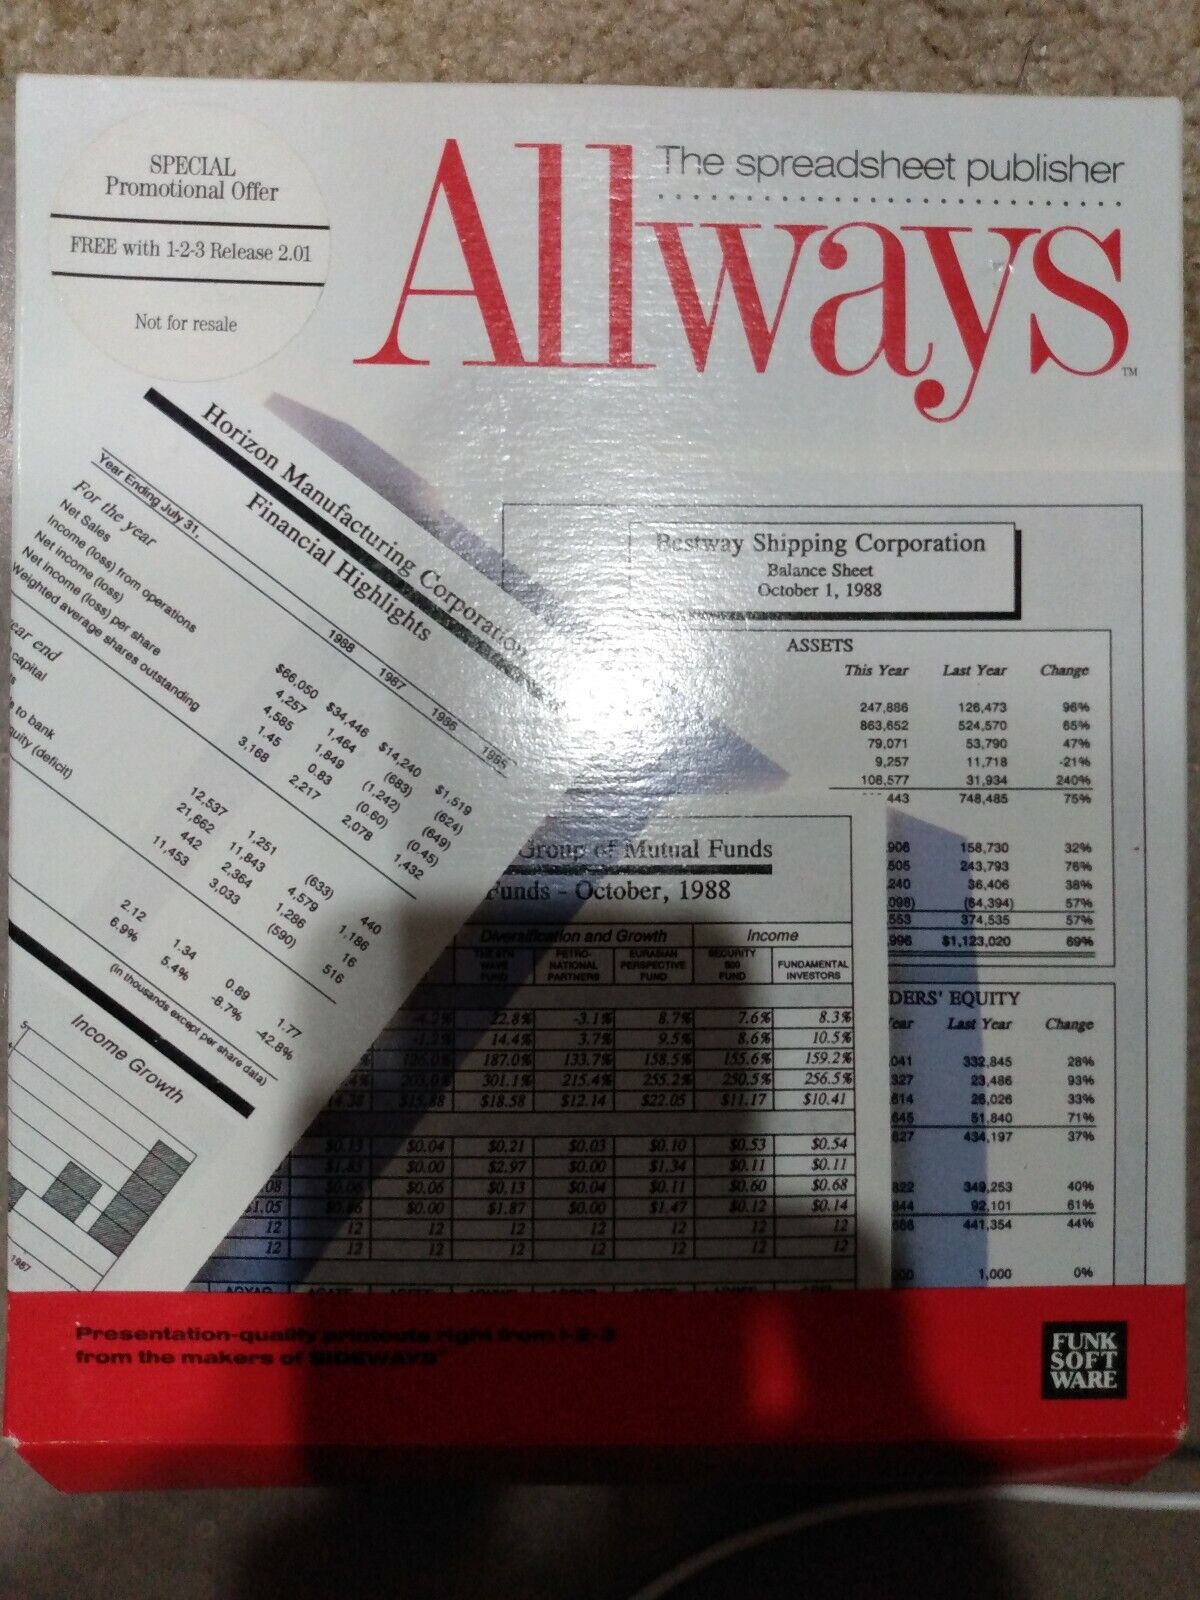 ALLWAYS IBM SPREADSHEET PUBLISHER FOR LOTUS 1-2-3 FUNK SOFTWARE 1988 3 DISCS NEW